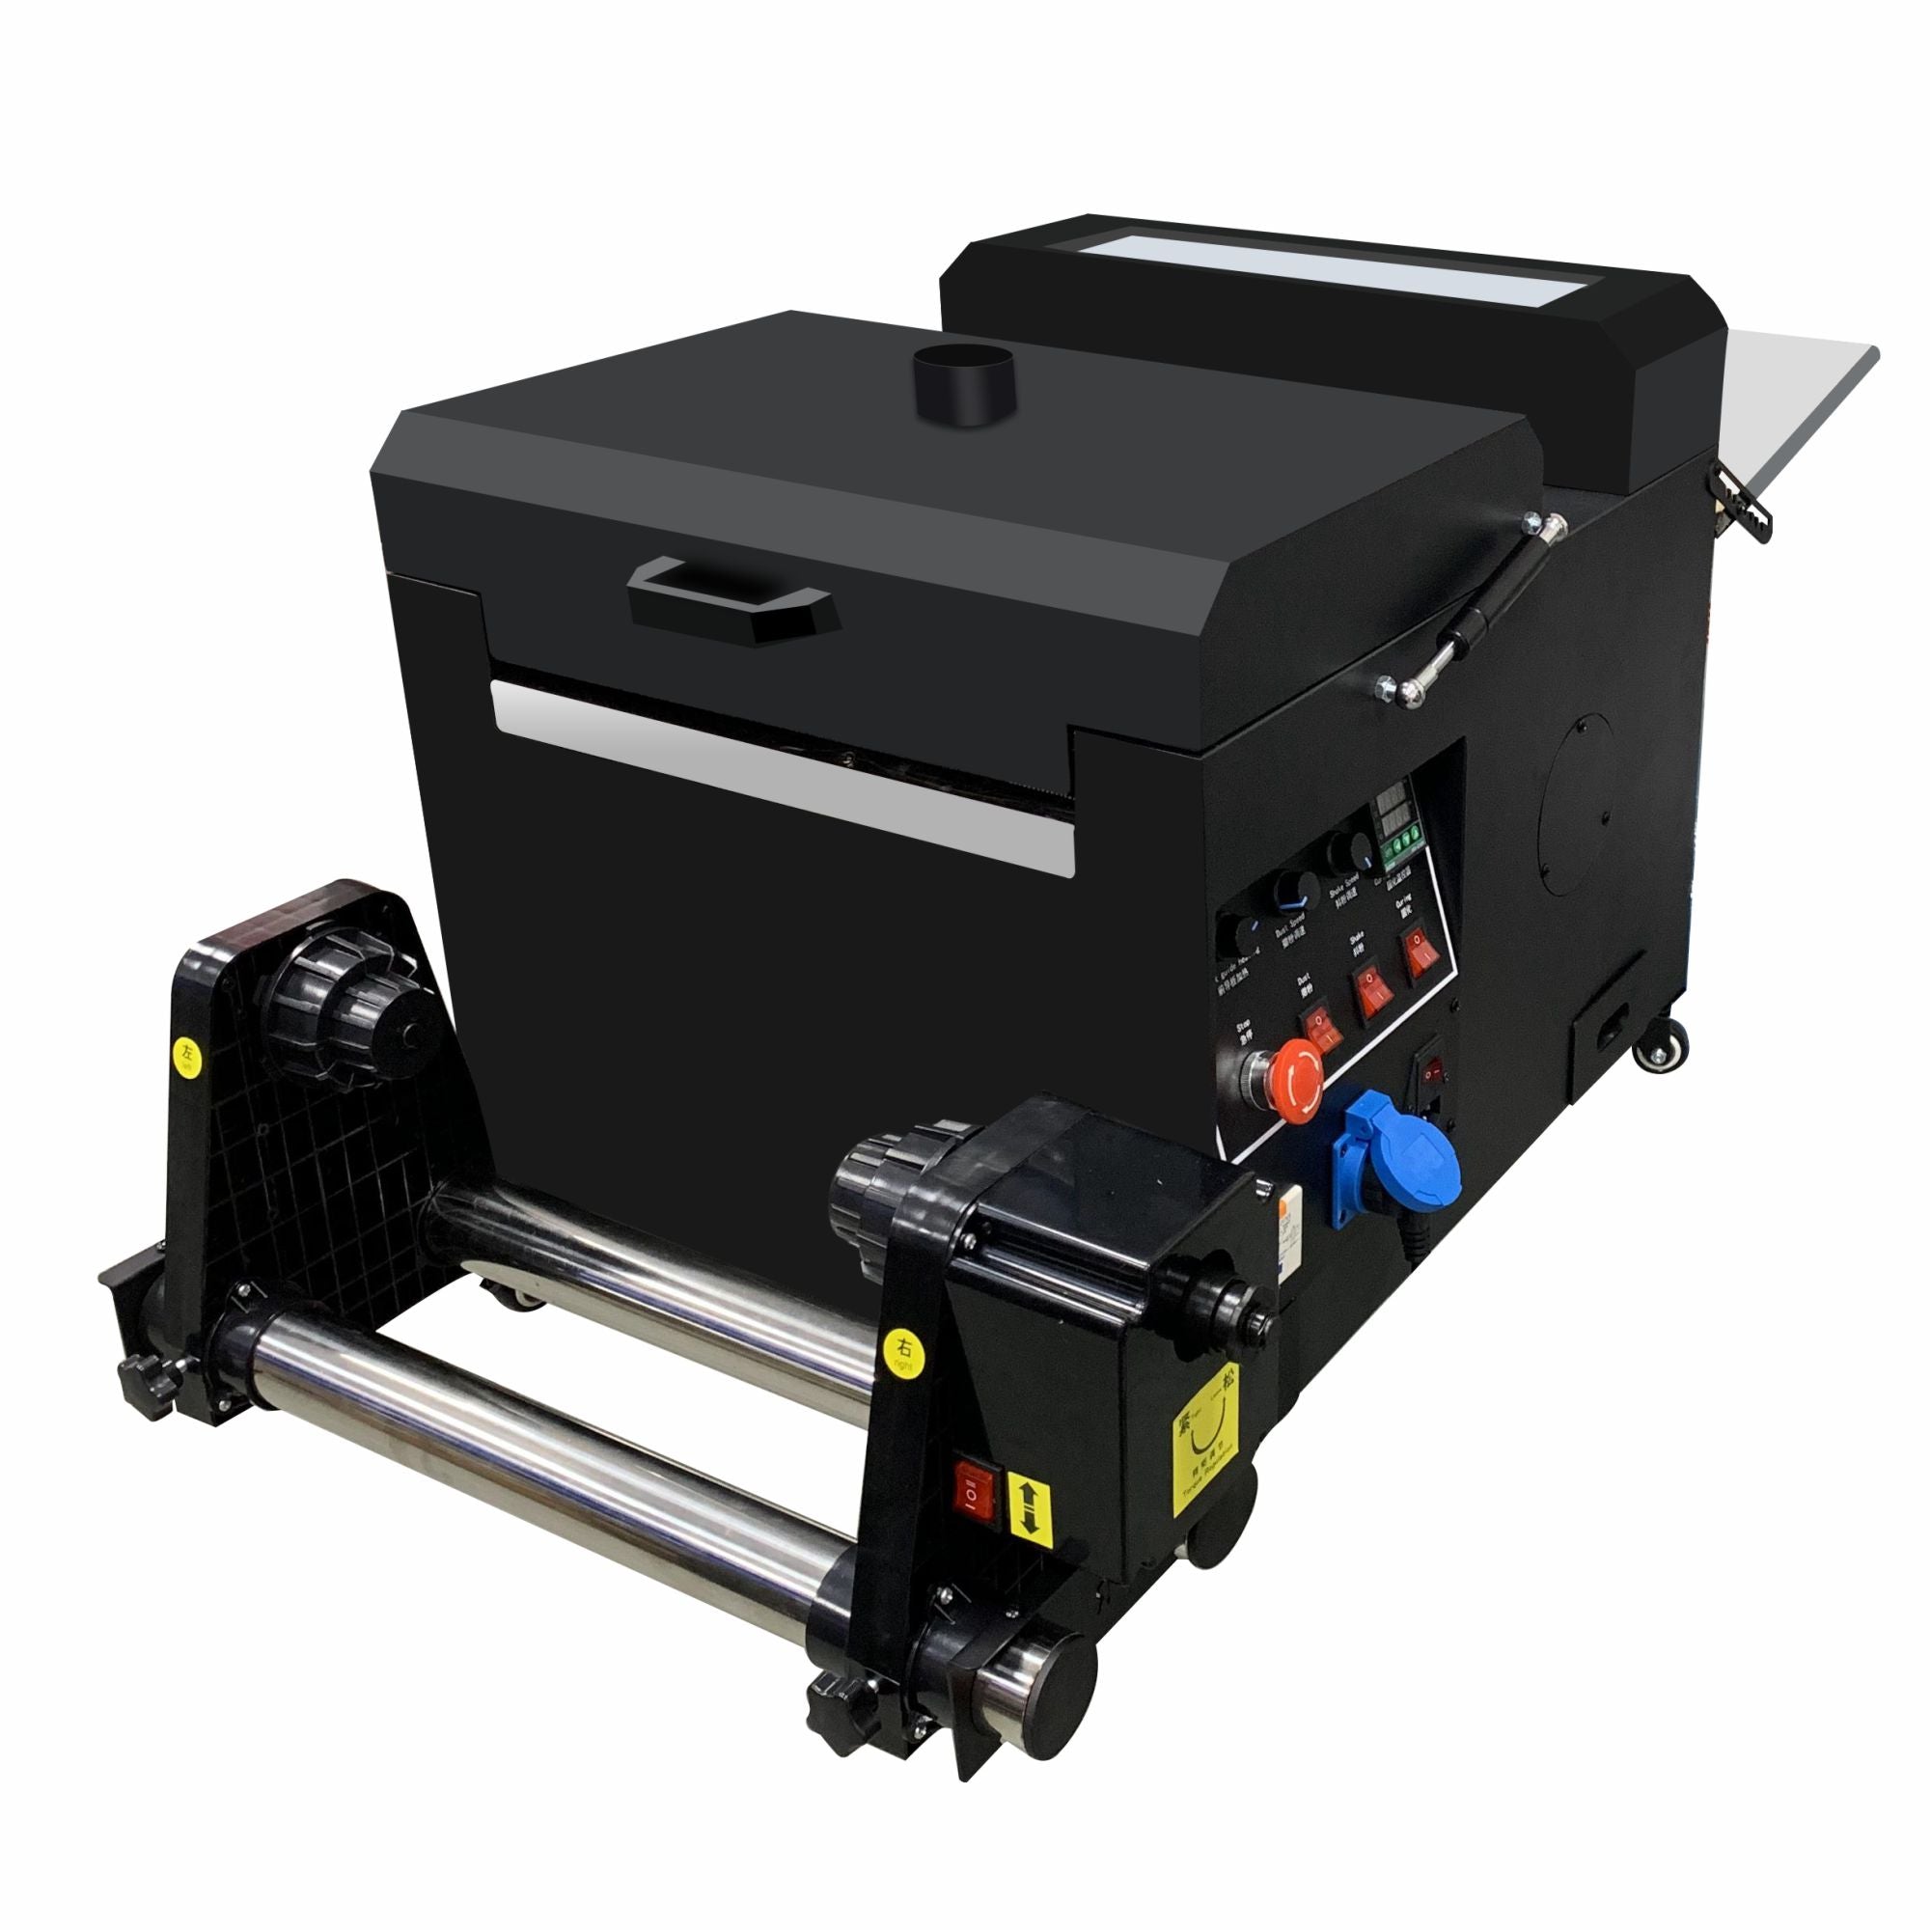 30cm cloth printing machine digital fabric printer shaker dryer